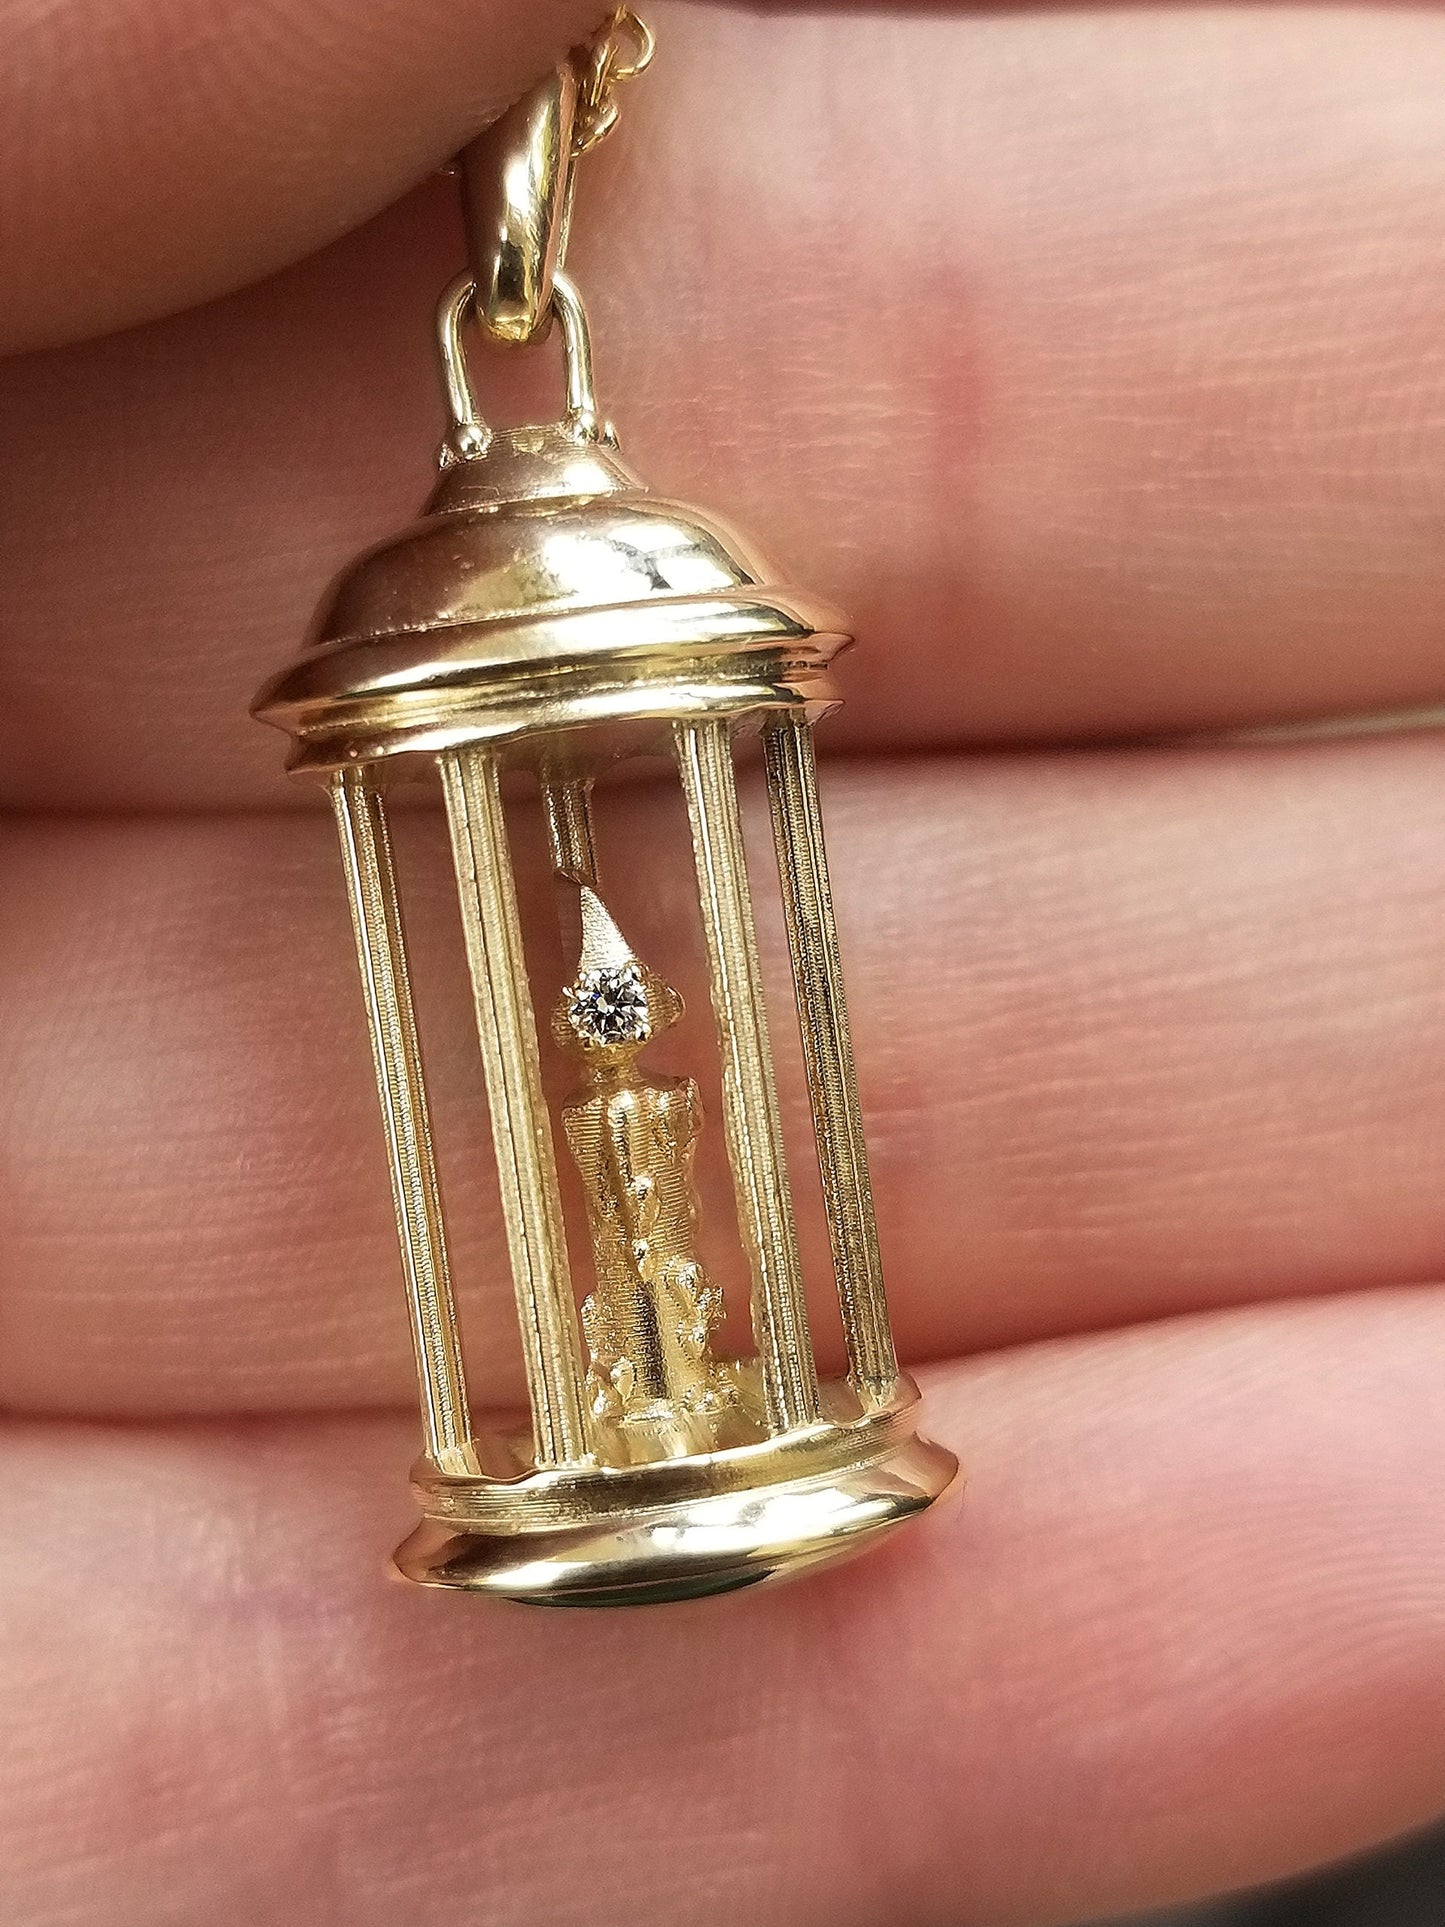 Ready to Ship - Hermit Lantern Necklace - 14k Yellow Gold - Candlelight - Diamond Flame